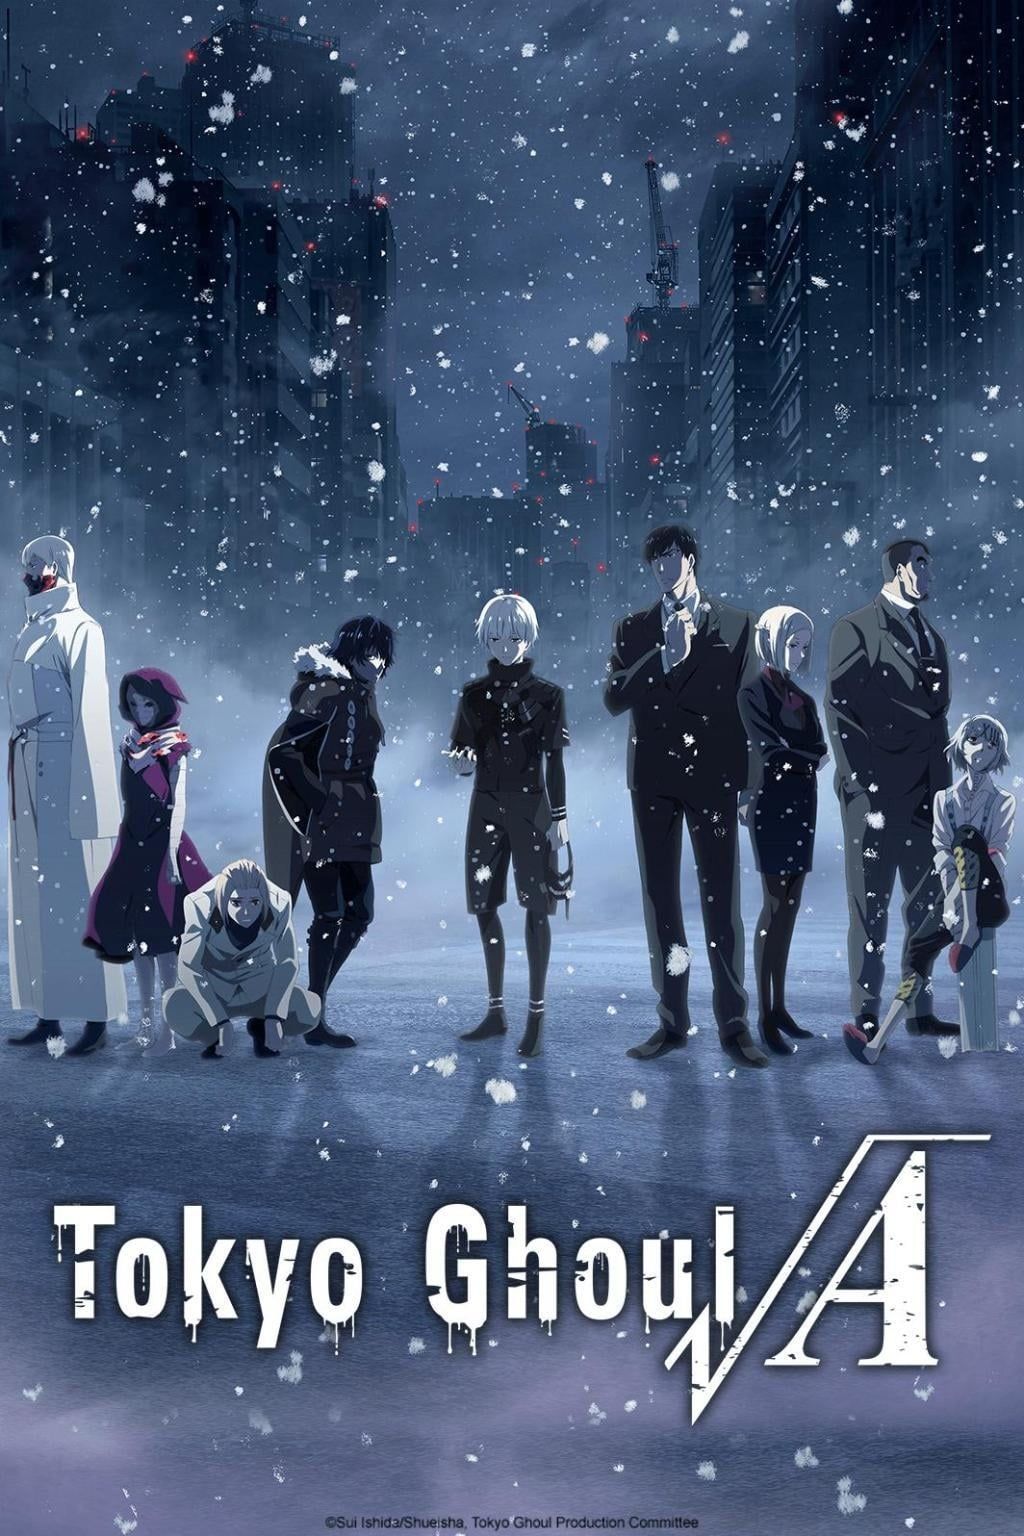 Watch Tokyo Ghoul · Tokyo Ghoul Full Episodes Online - Plex